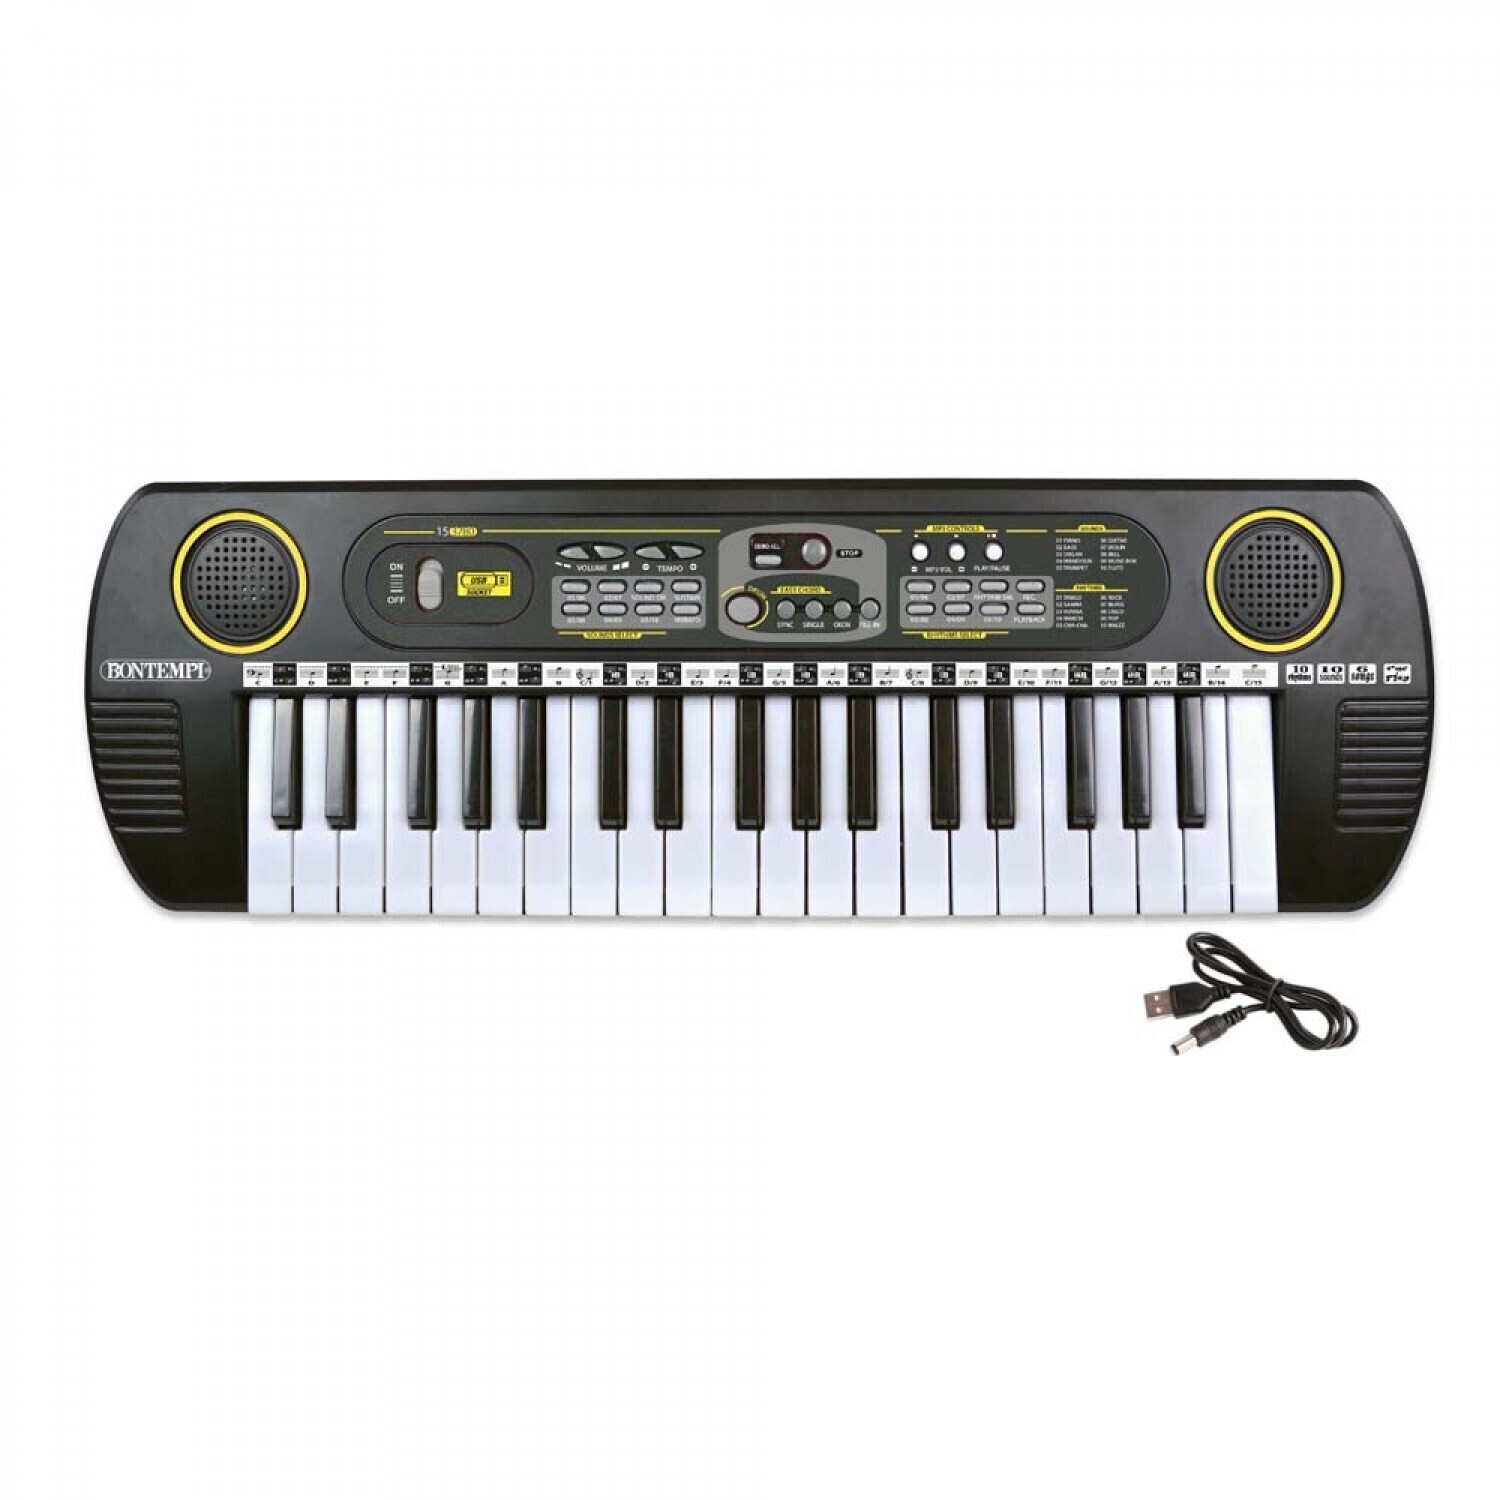 Bontempi Digital keyboard (153780) ab 34,92 € | Preisvergleich bei